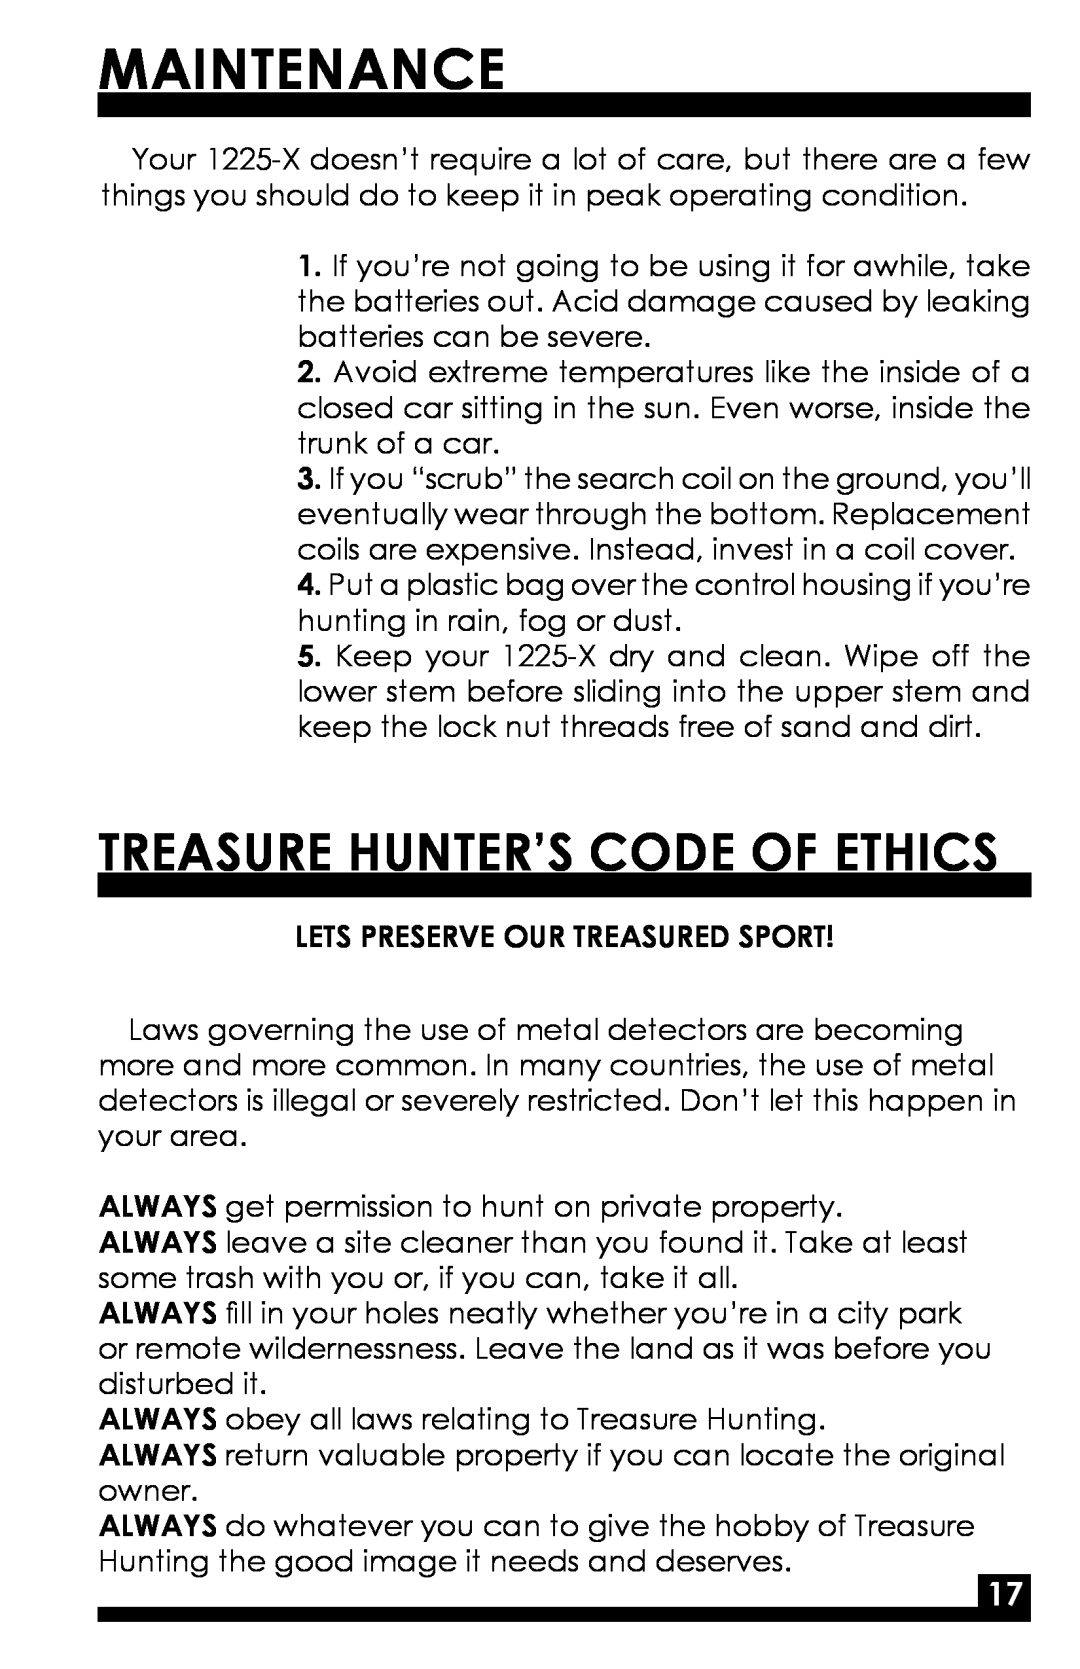 Fisher 1225-X manual Maintenance, Treasure Hunter’S Code Of Ethics 